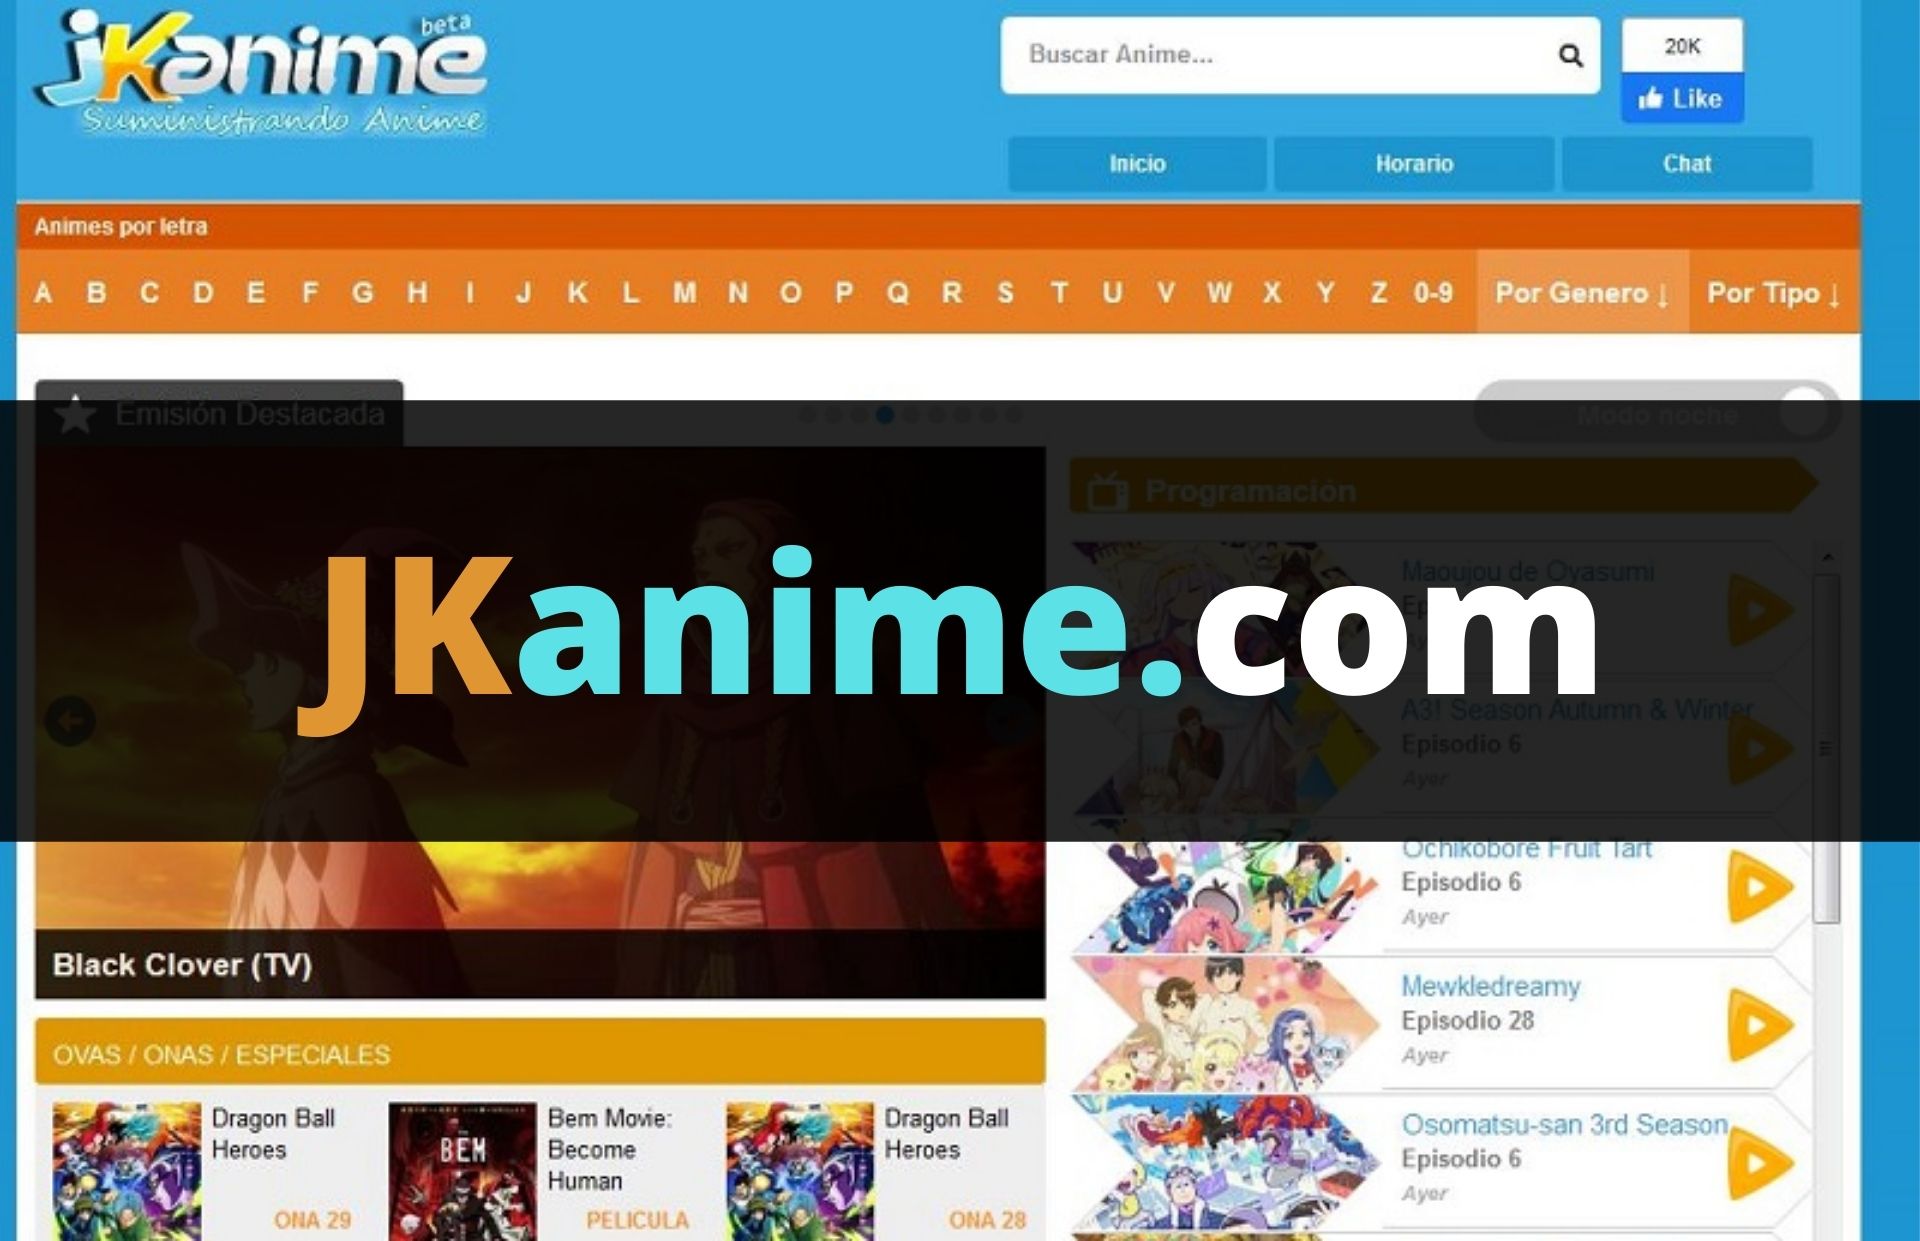 jkanime.net login safely, analysis & comments 